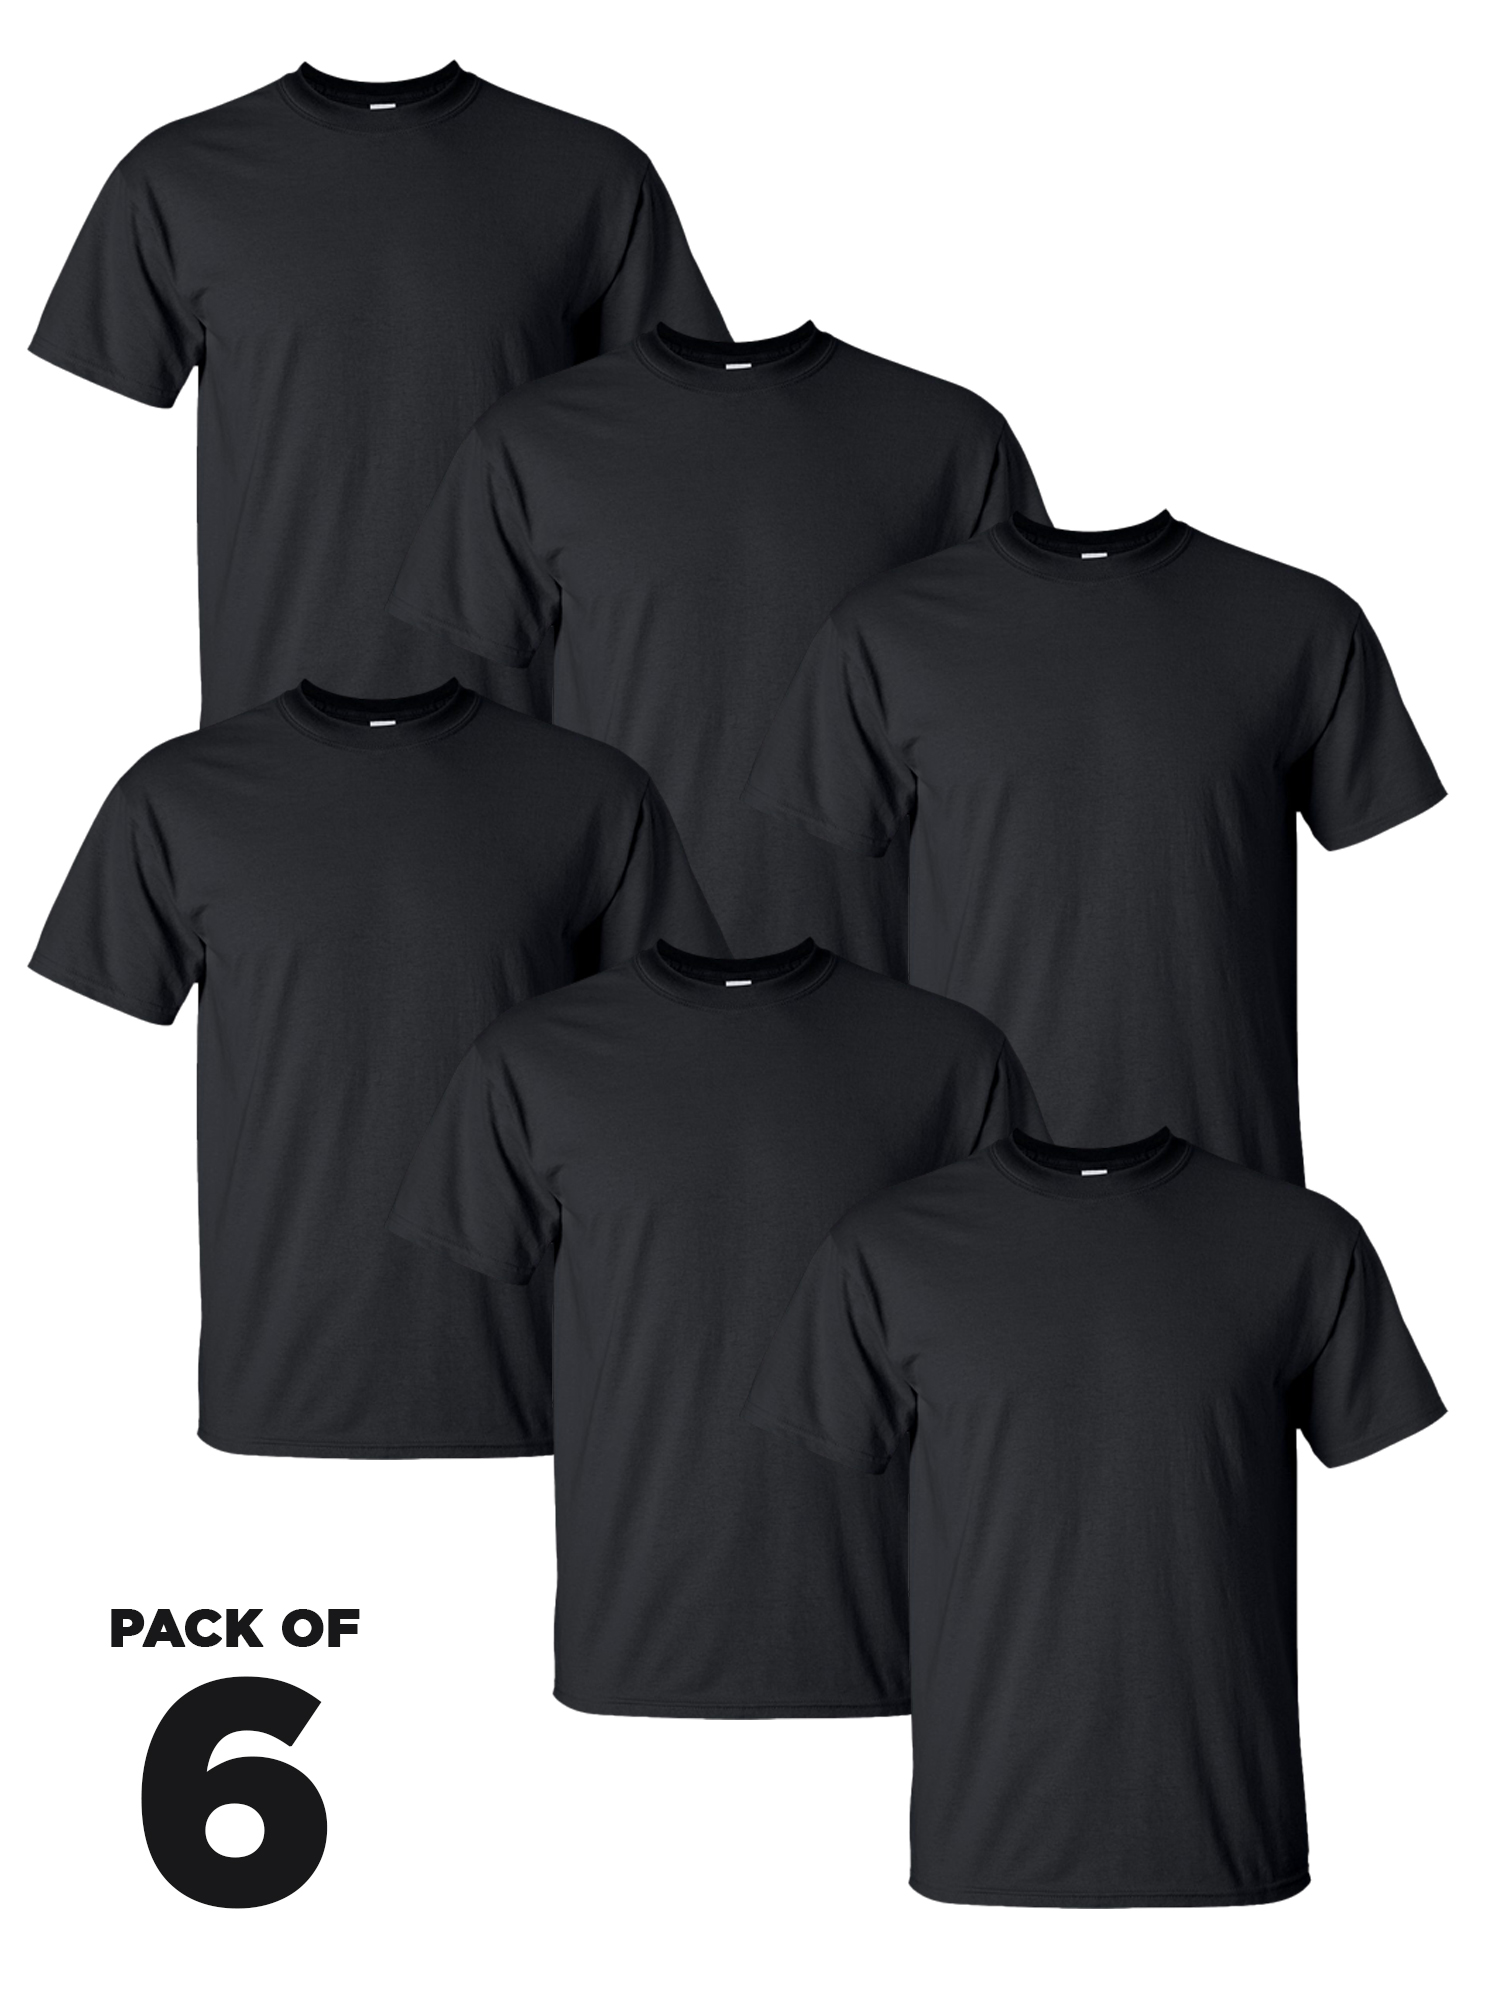 Big and Tall T Shirt for Men Tall Sizes Gildan Ultra Cotton Tall T-Shirt - 2000T T shirts XLT Black T Shirts for Men 2XLT 3XLT Big & Tall T Shirts Tall Mens Shirts Big & Tall T Shirts - image 1 of 2